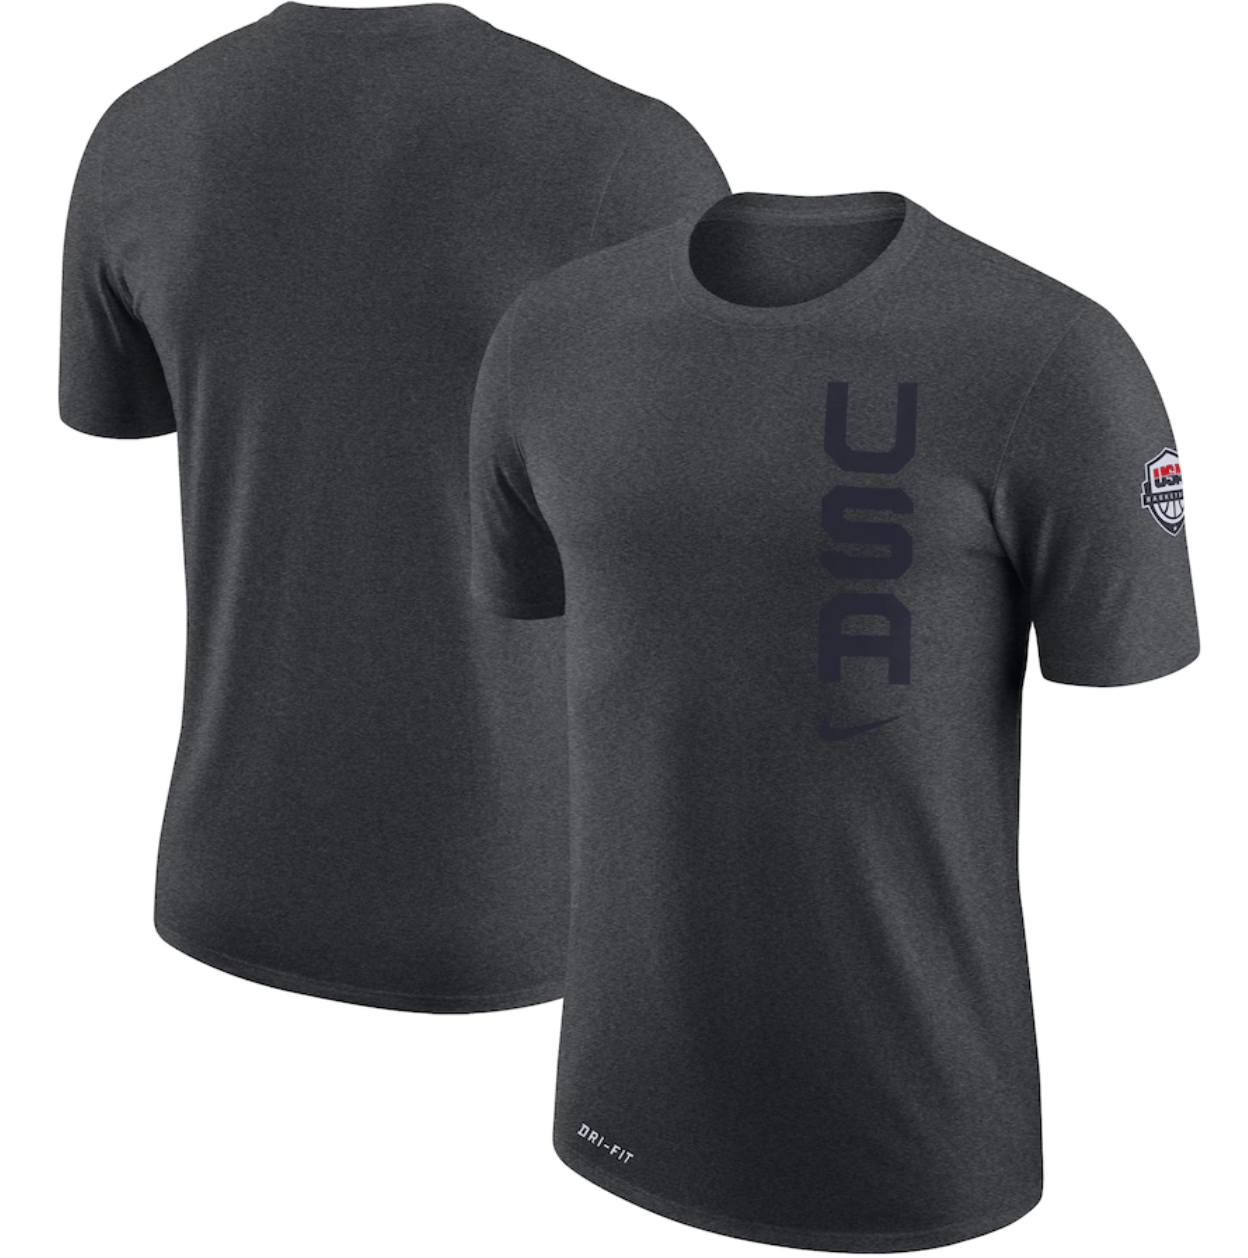 Team USA Basketball Nike Team Performance T-Shirt